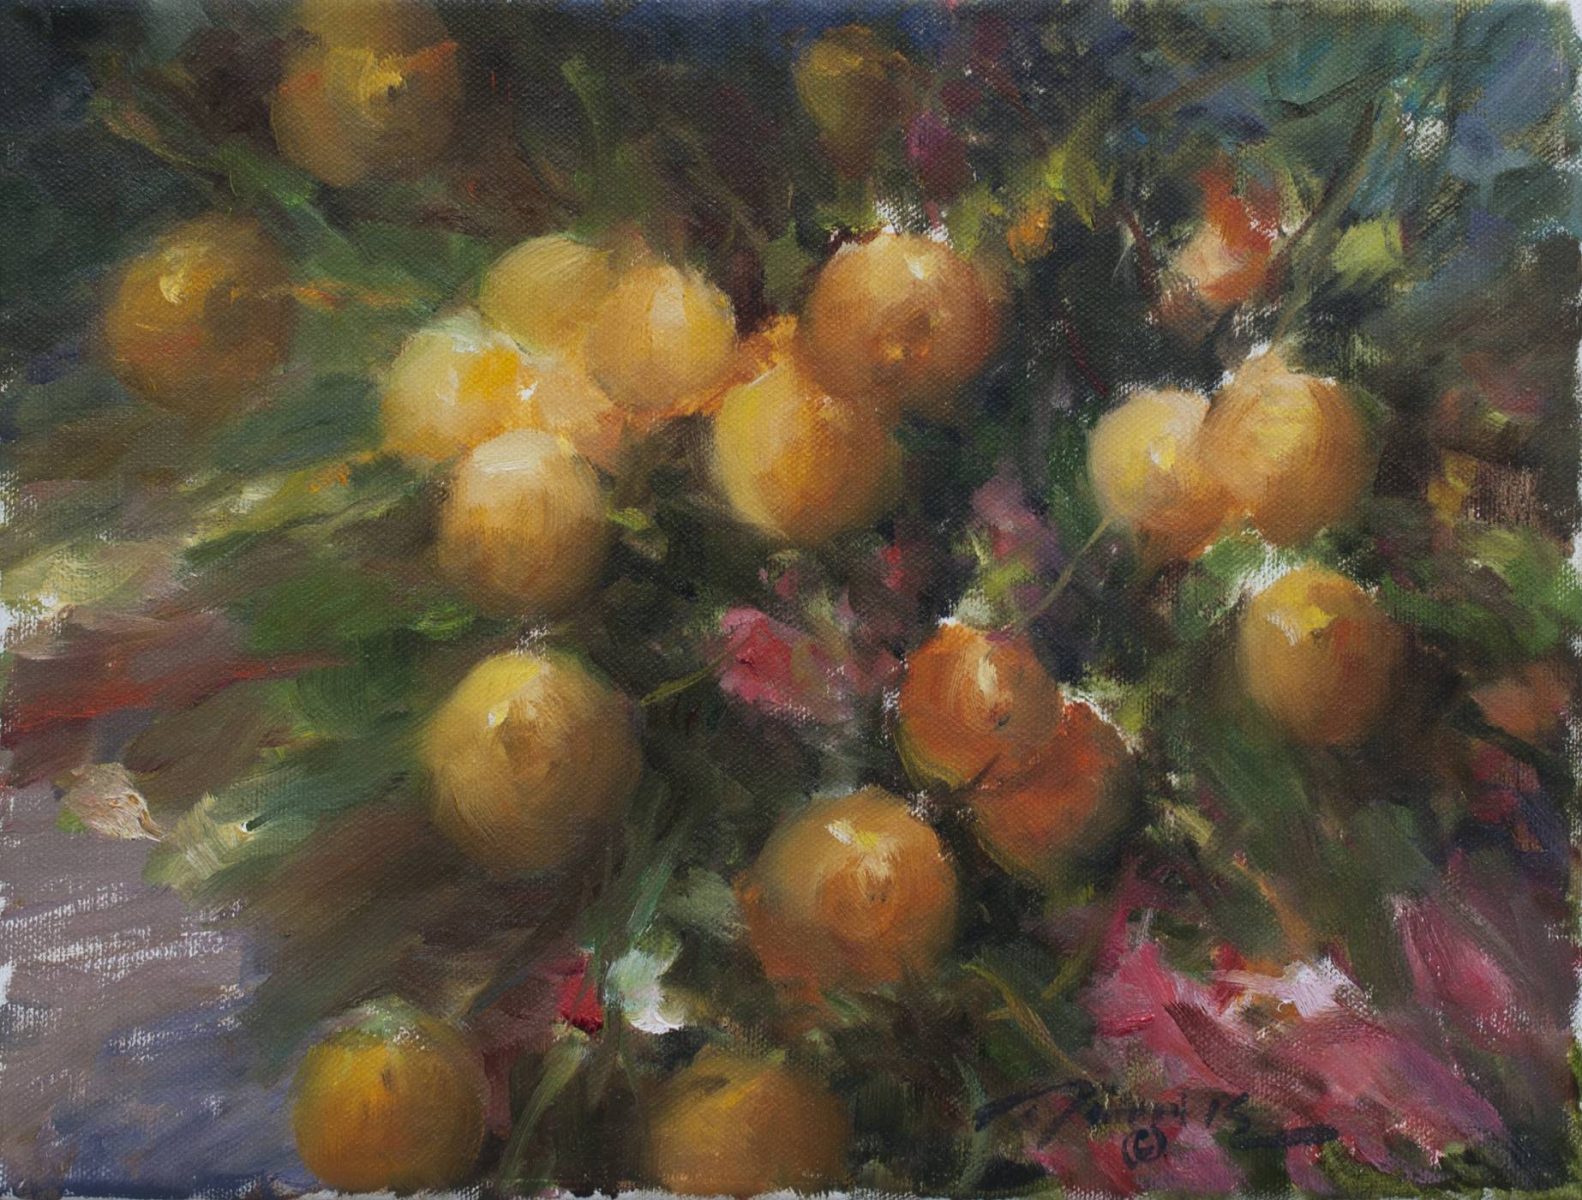 Spanish Oranges by Ramon Kelley